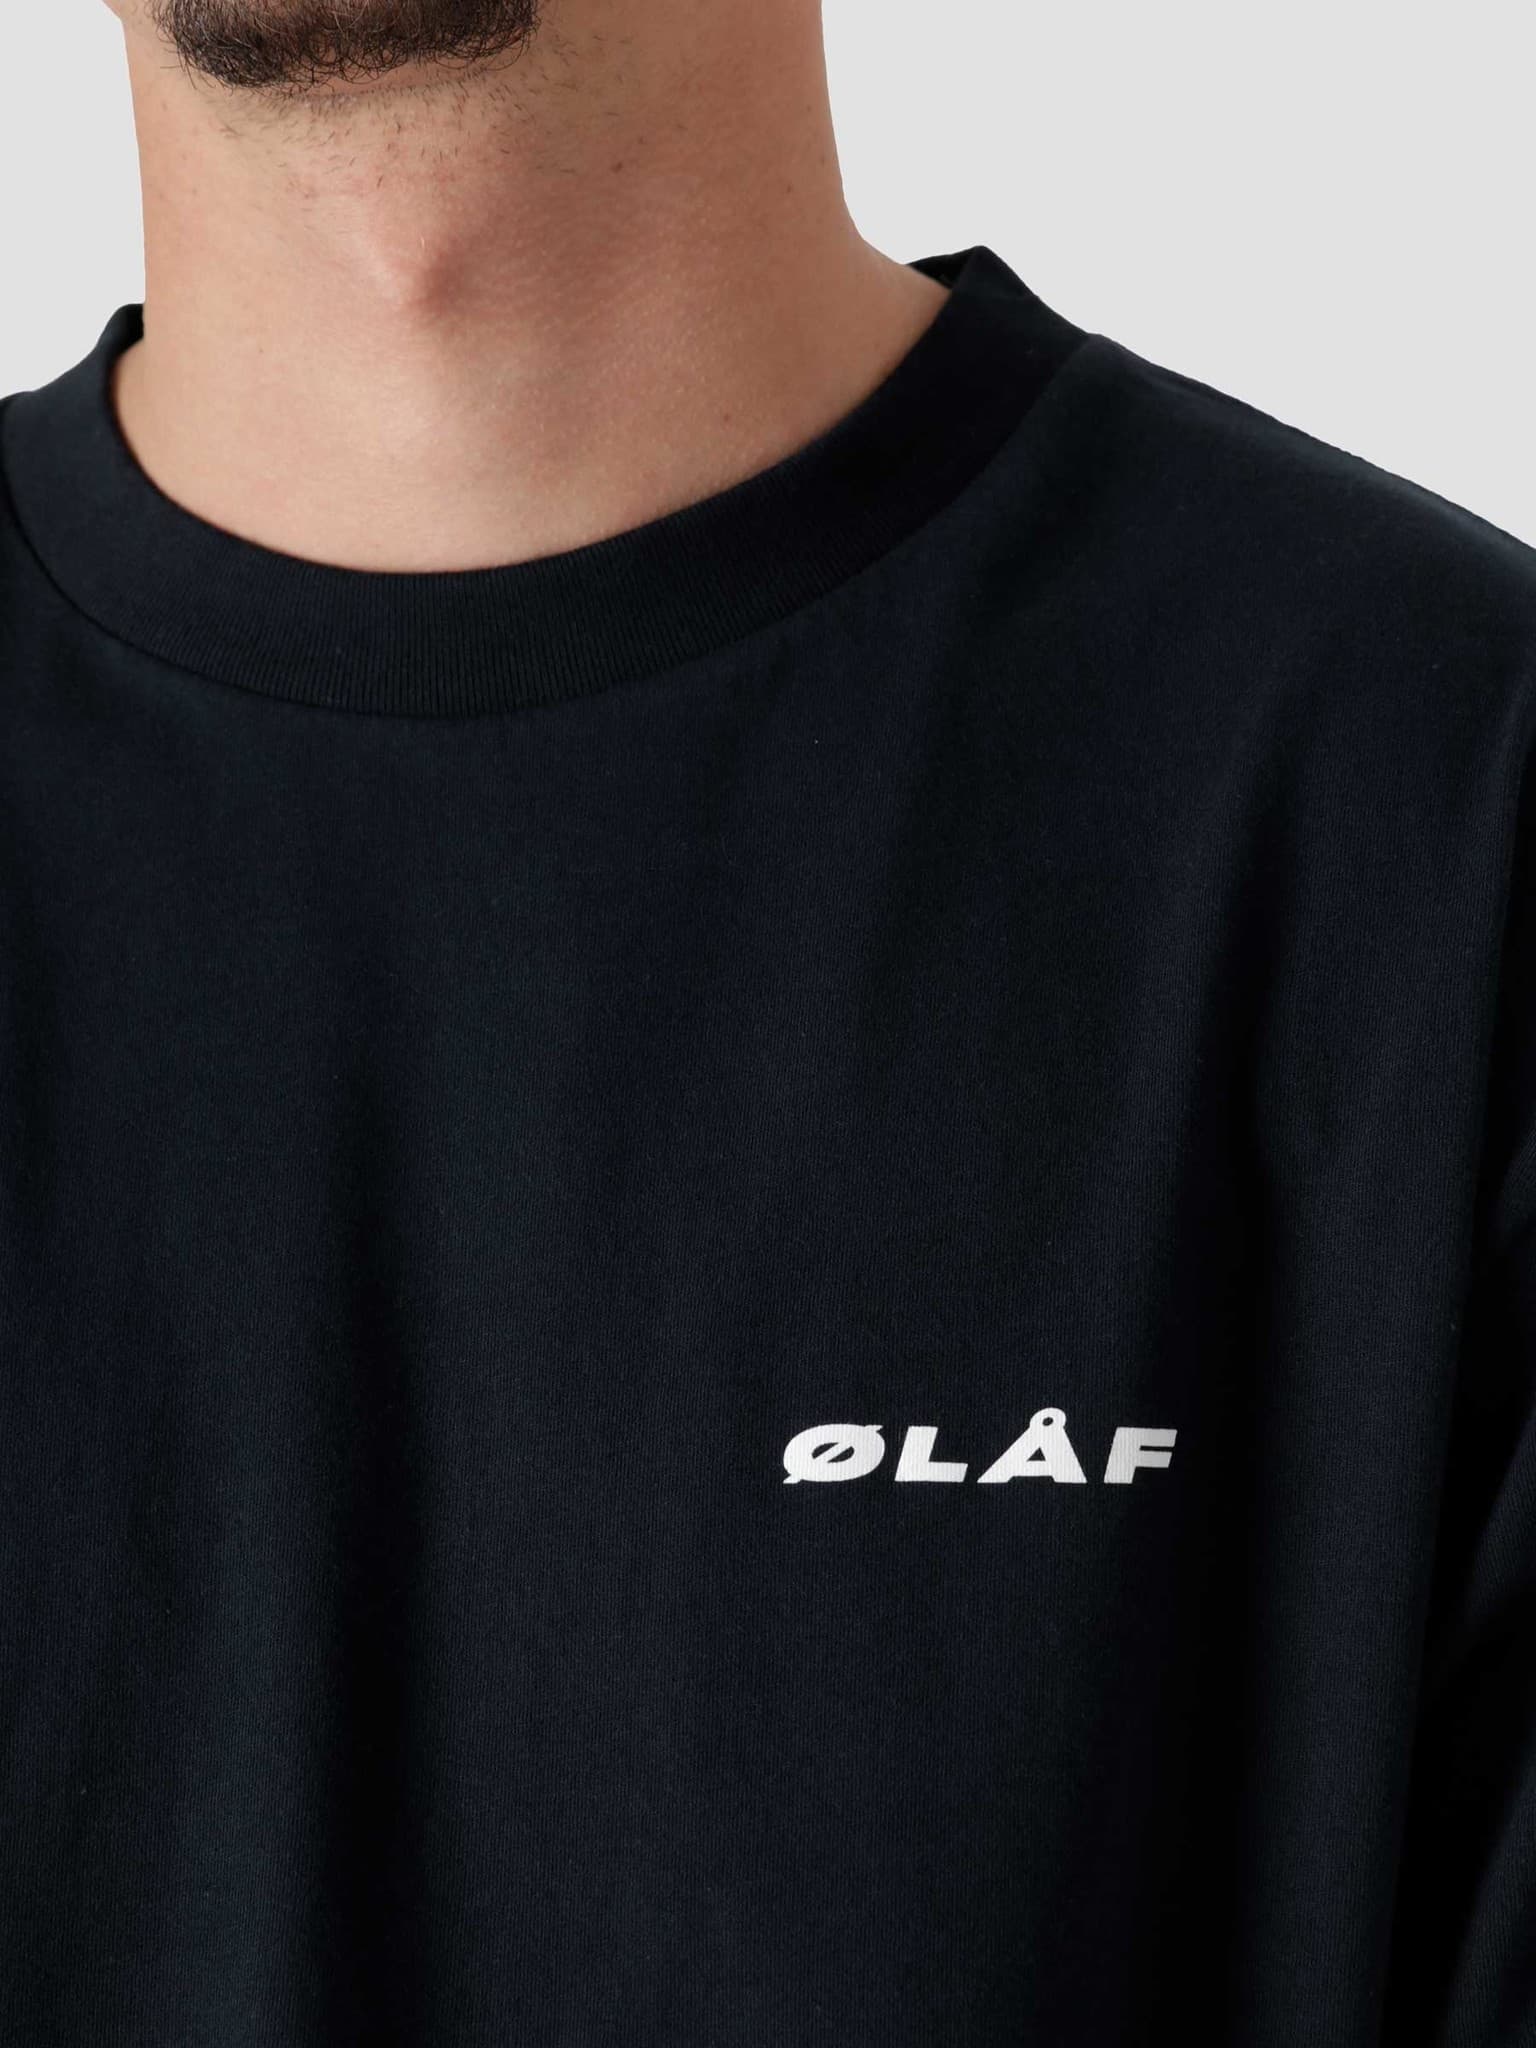 OLAF Uniform T-Shirt Navy